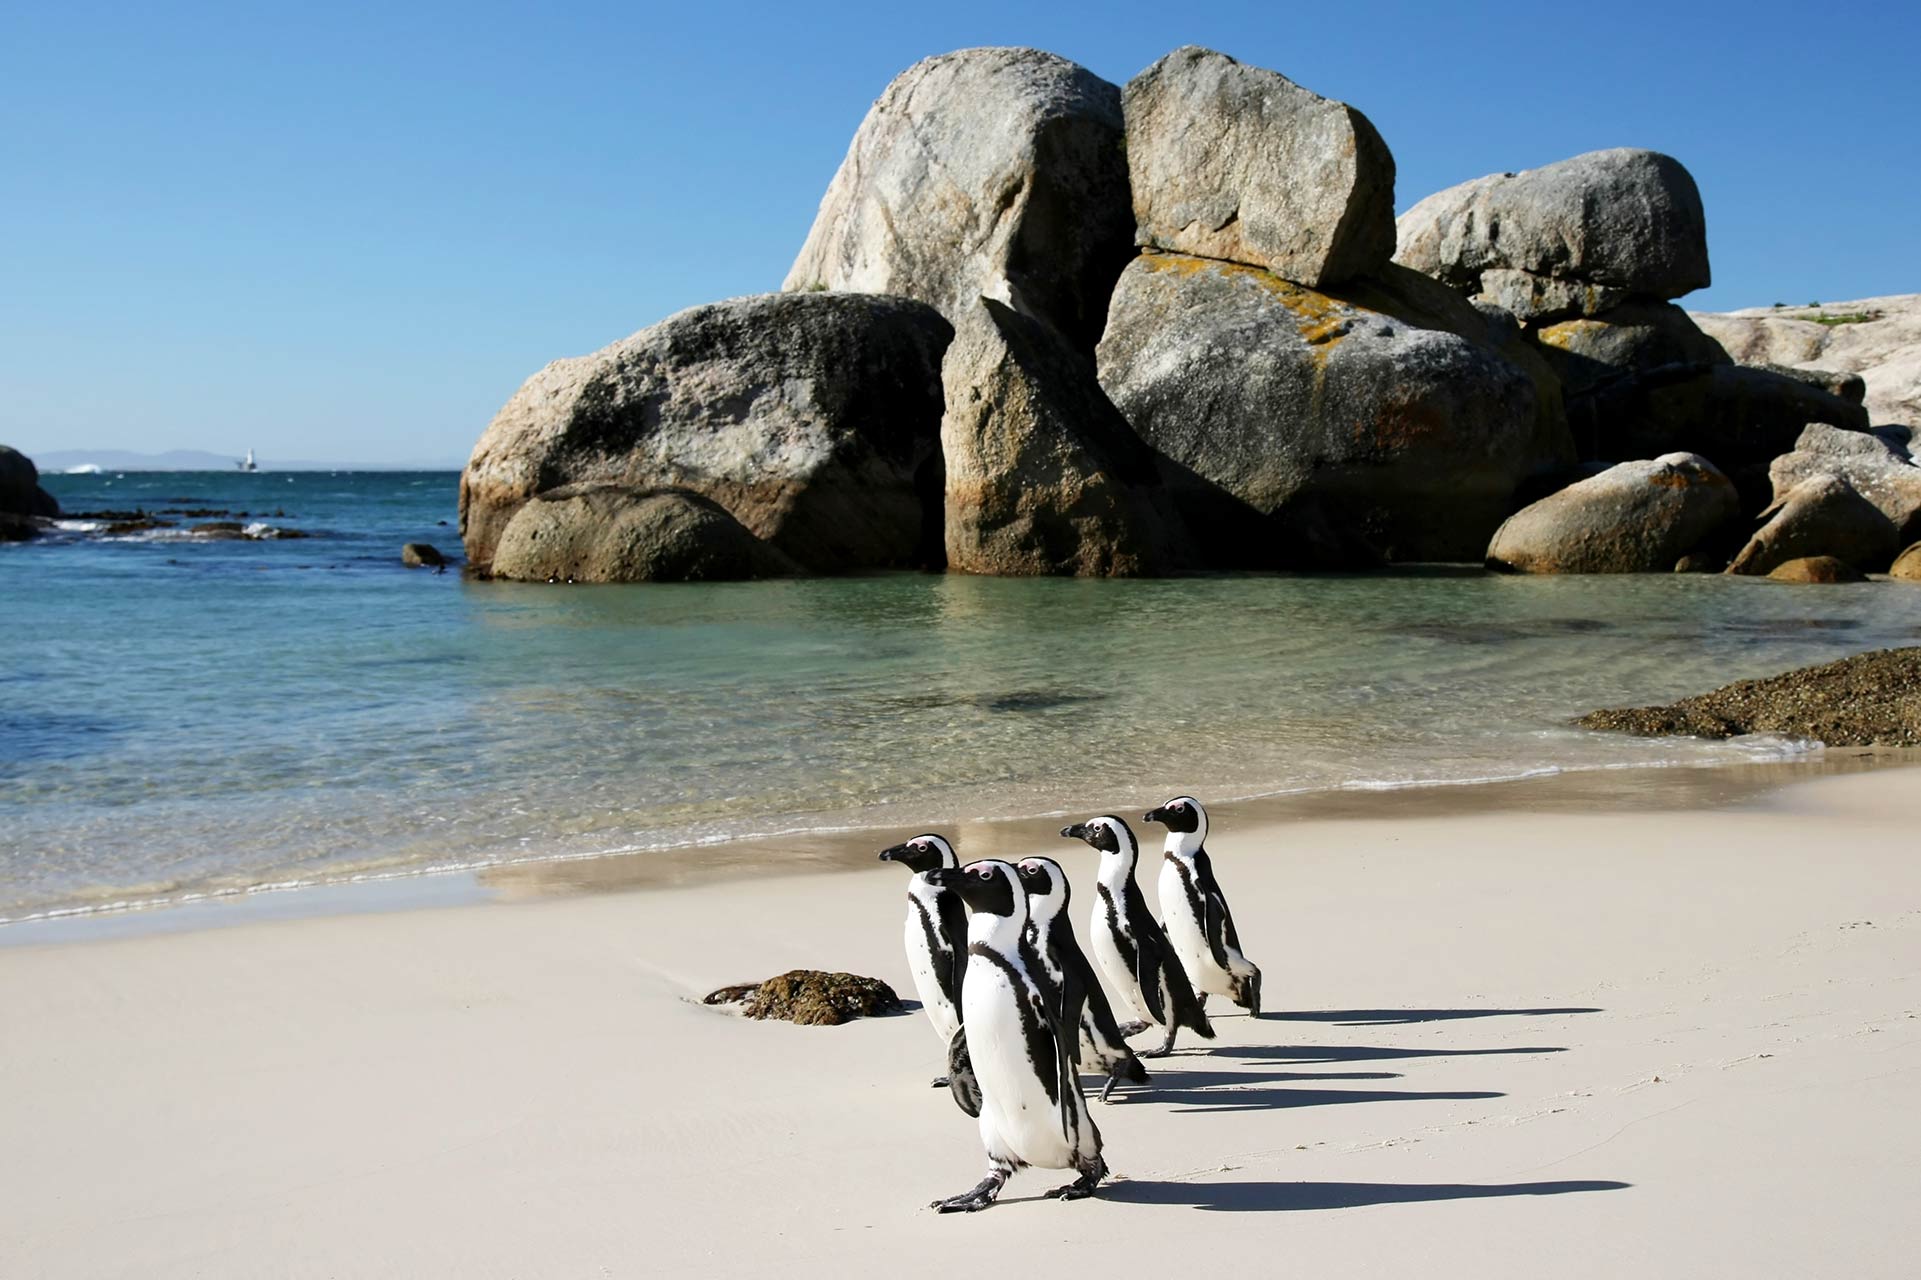 Penguins at boulders beach in Simons Town